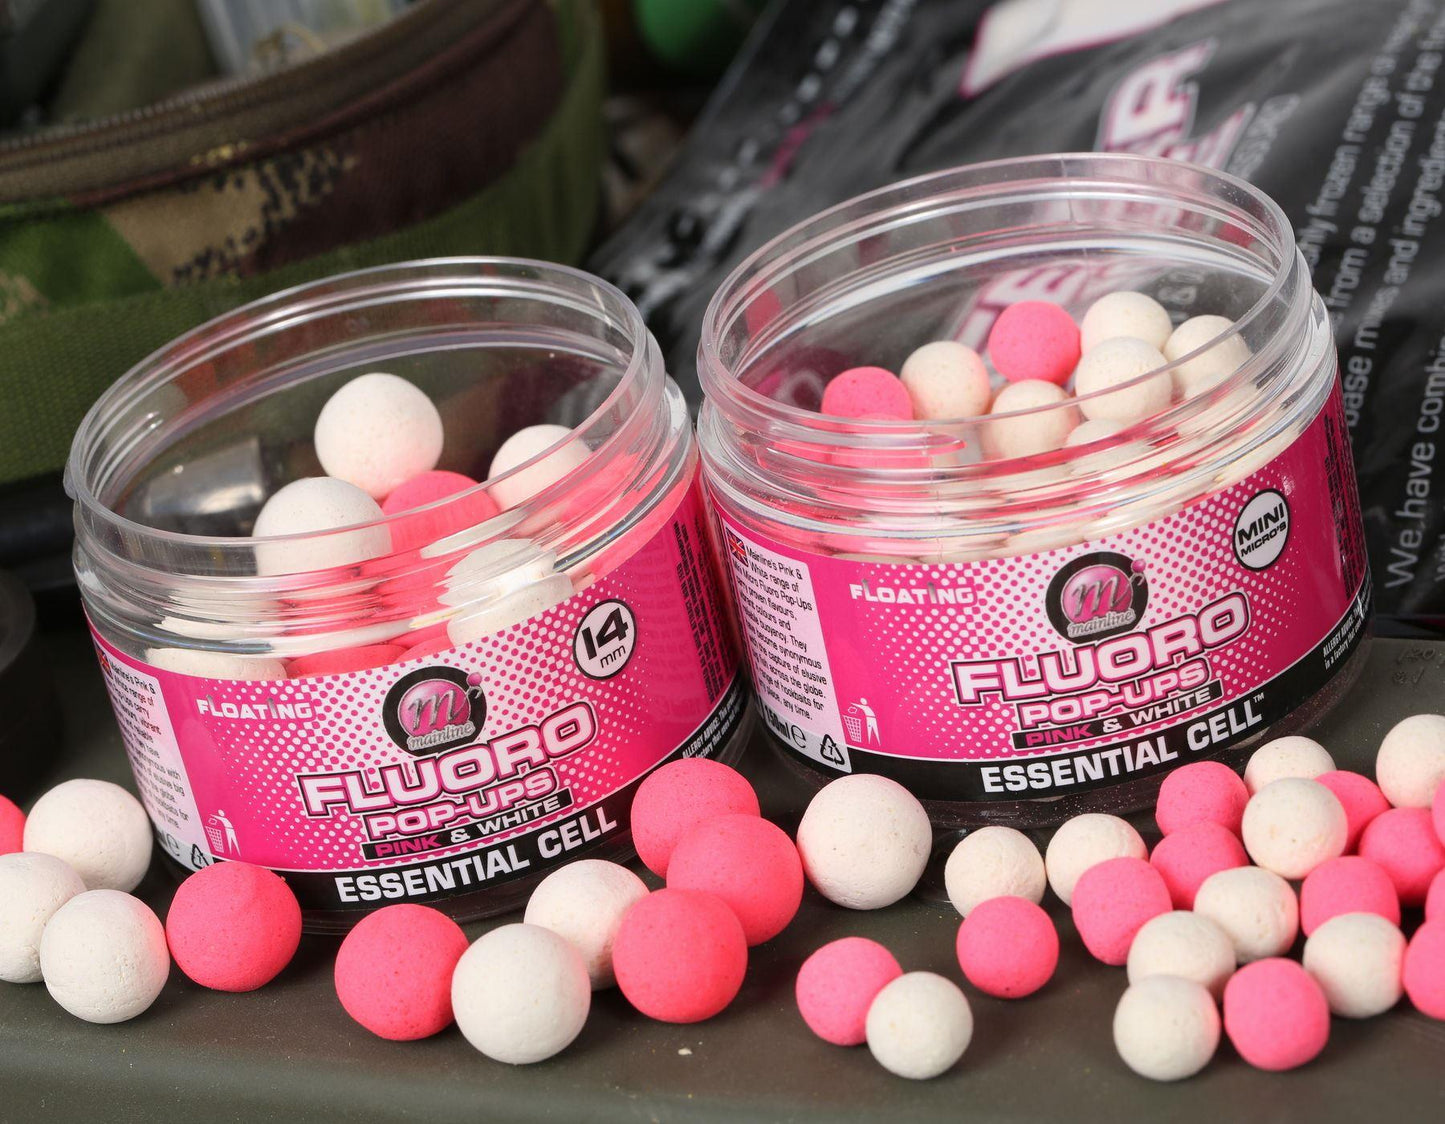 Mainline Fluoro Pop-Ups Pink & White 14mm